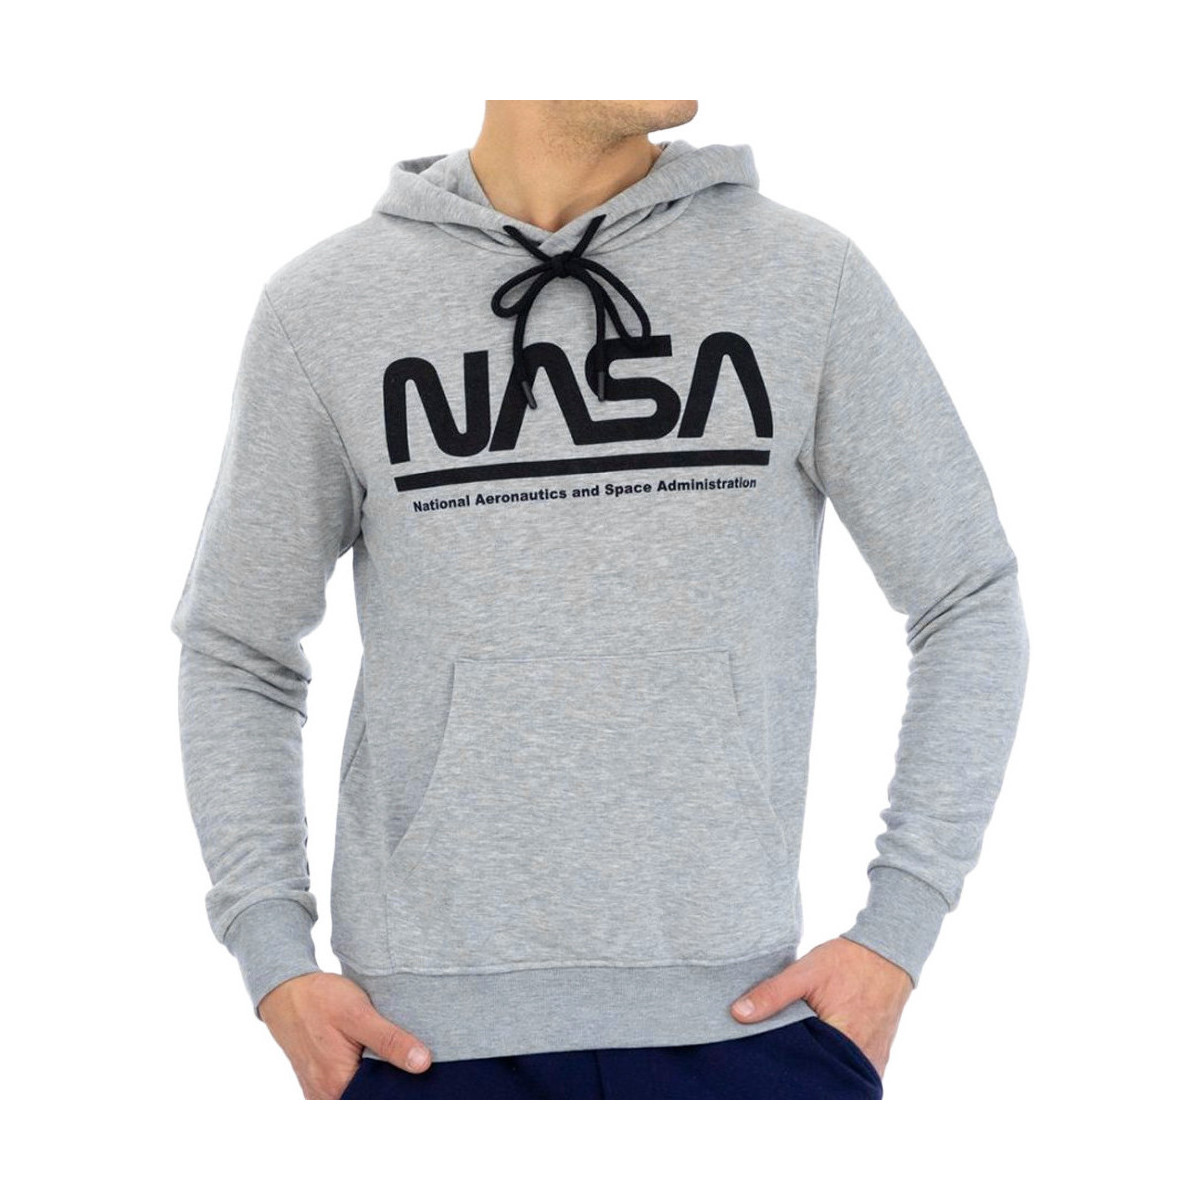 Vêtements Homme Sweats Nasa -NASA05H Gris